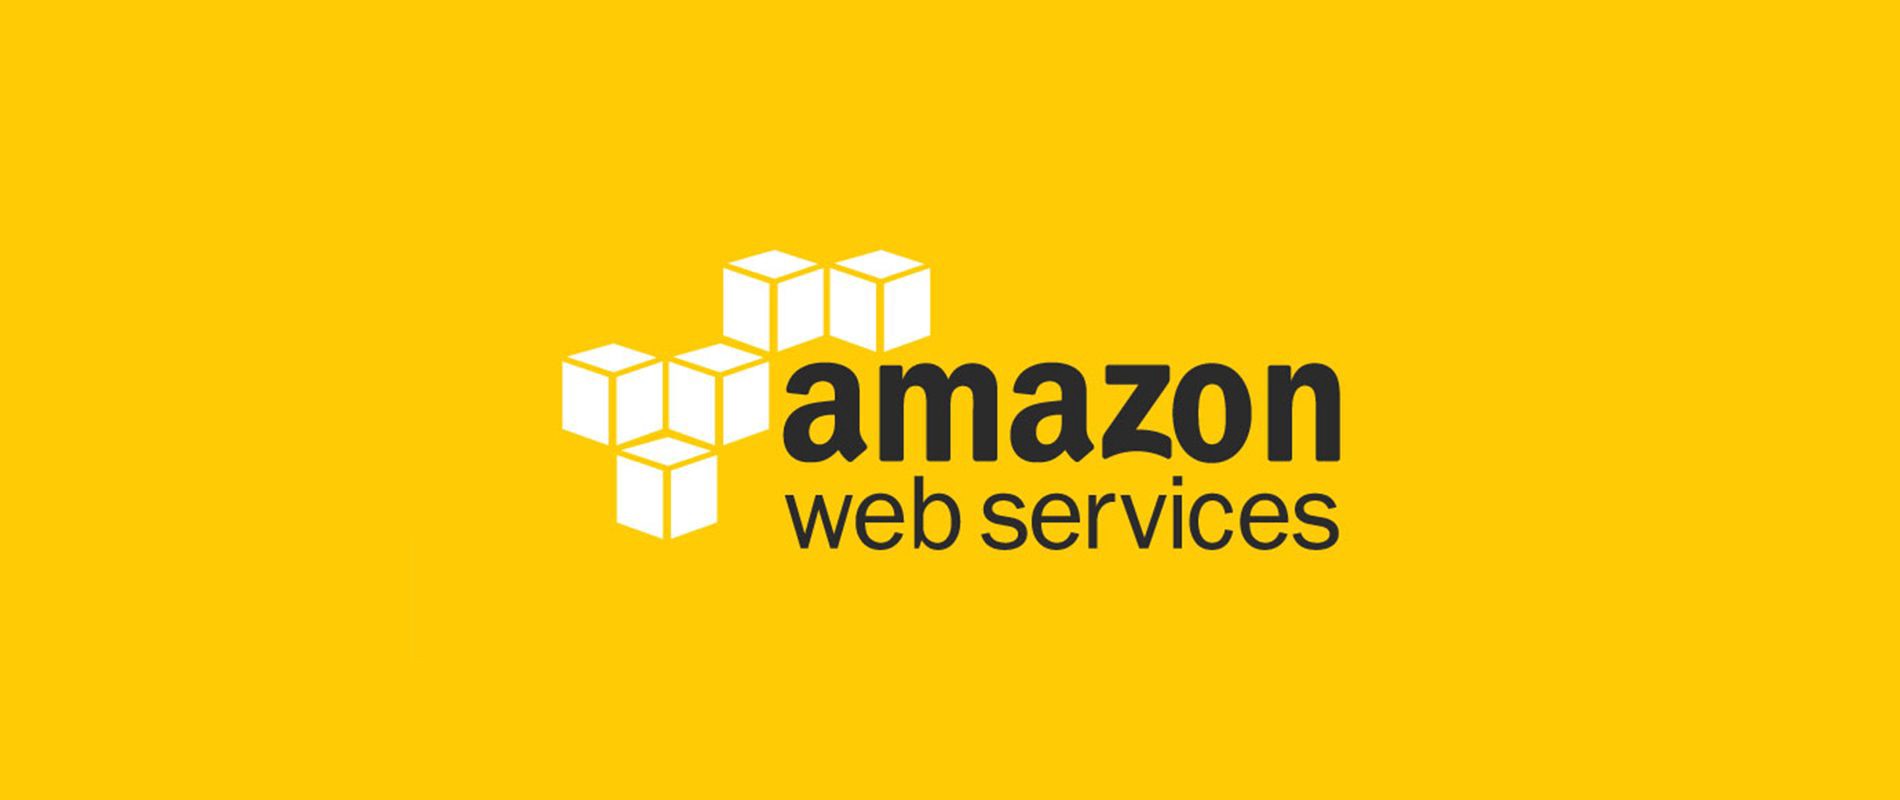 Amazon Web Services – Migrating to AWS